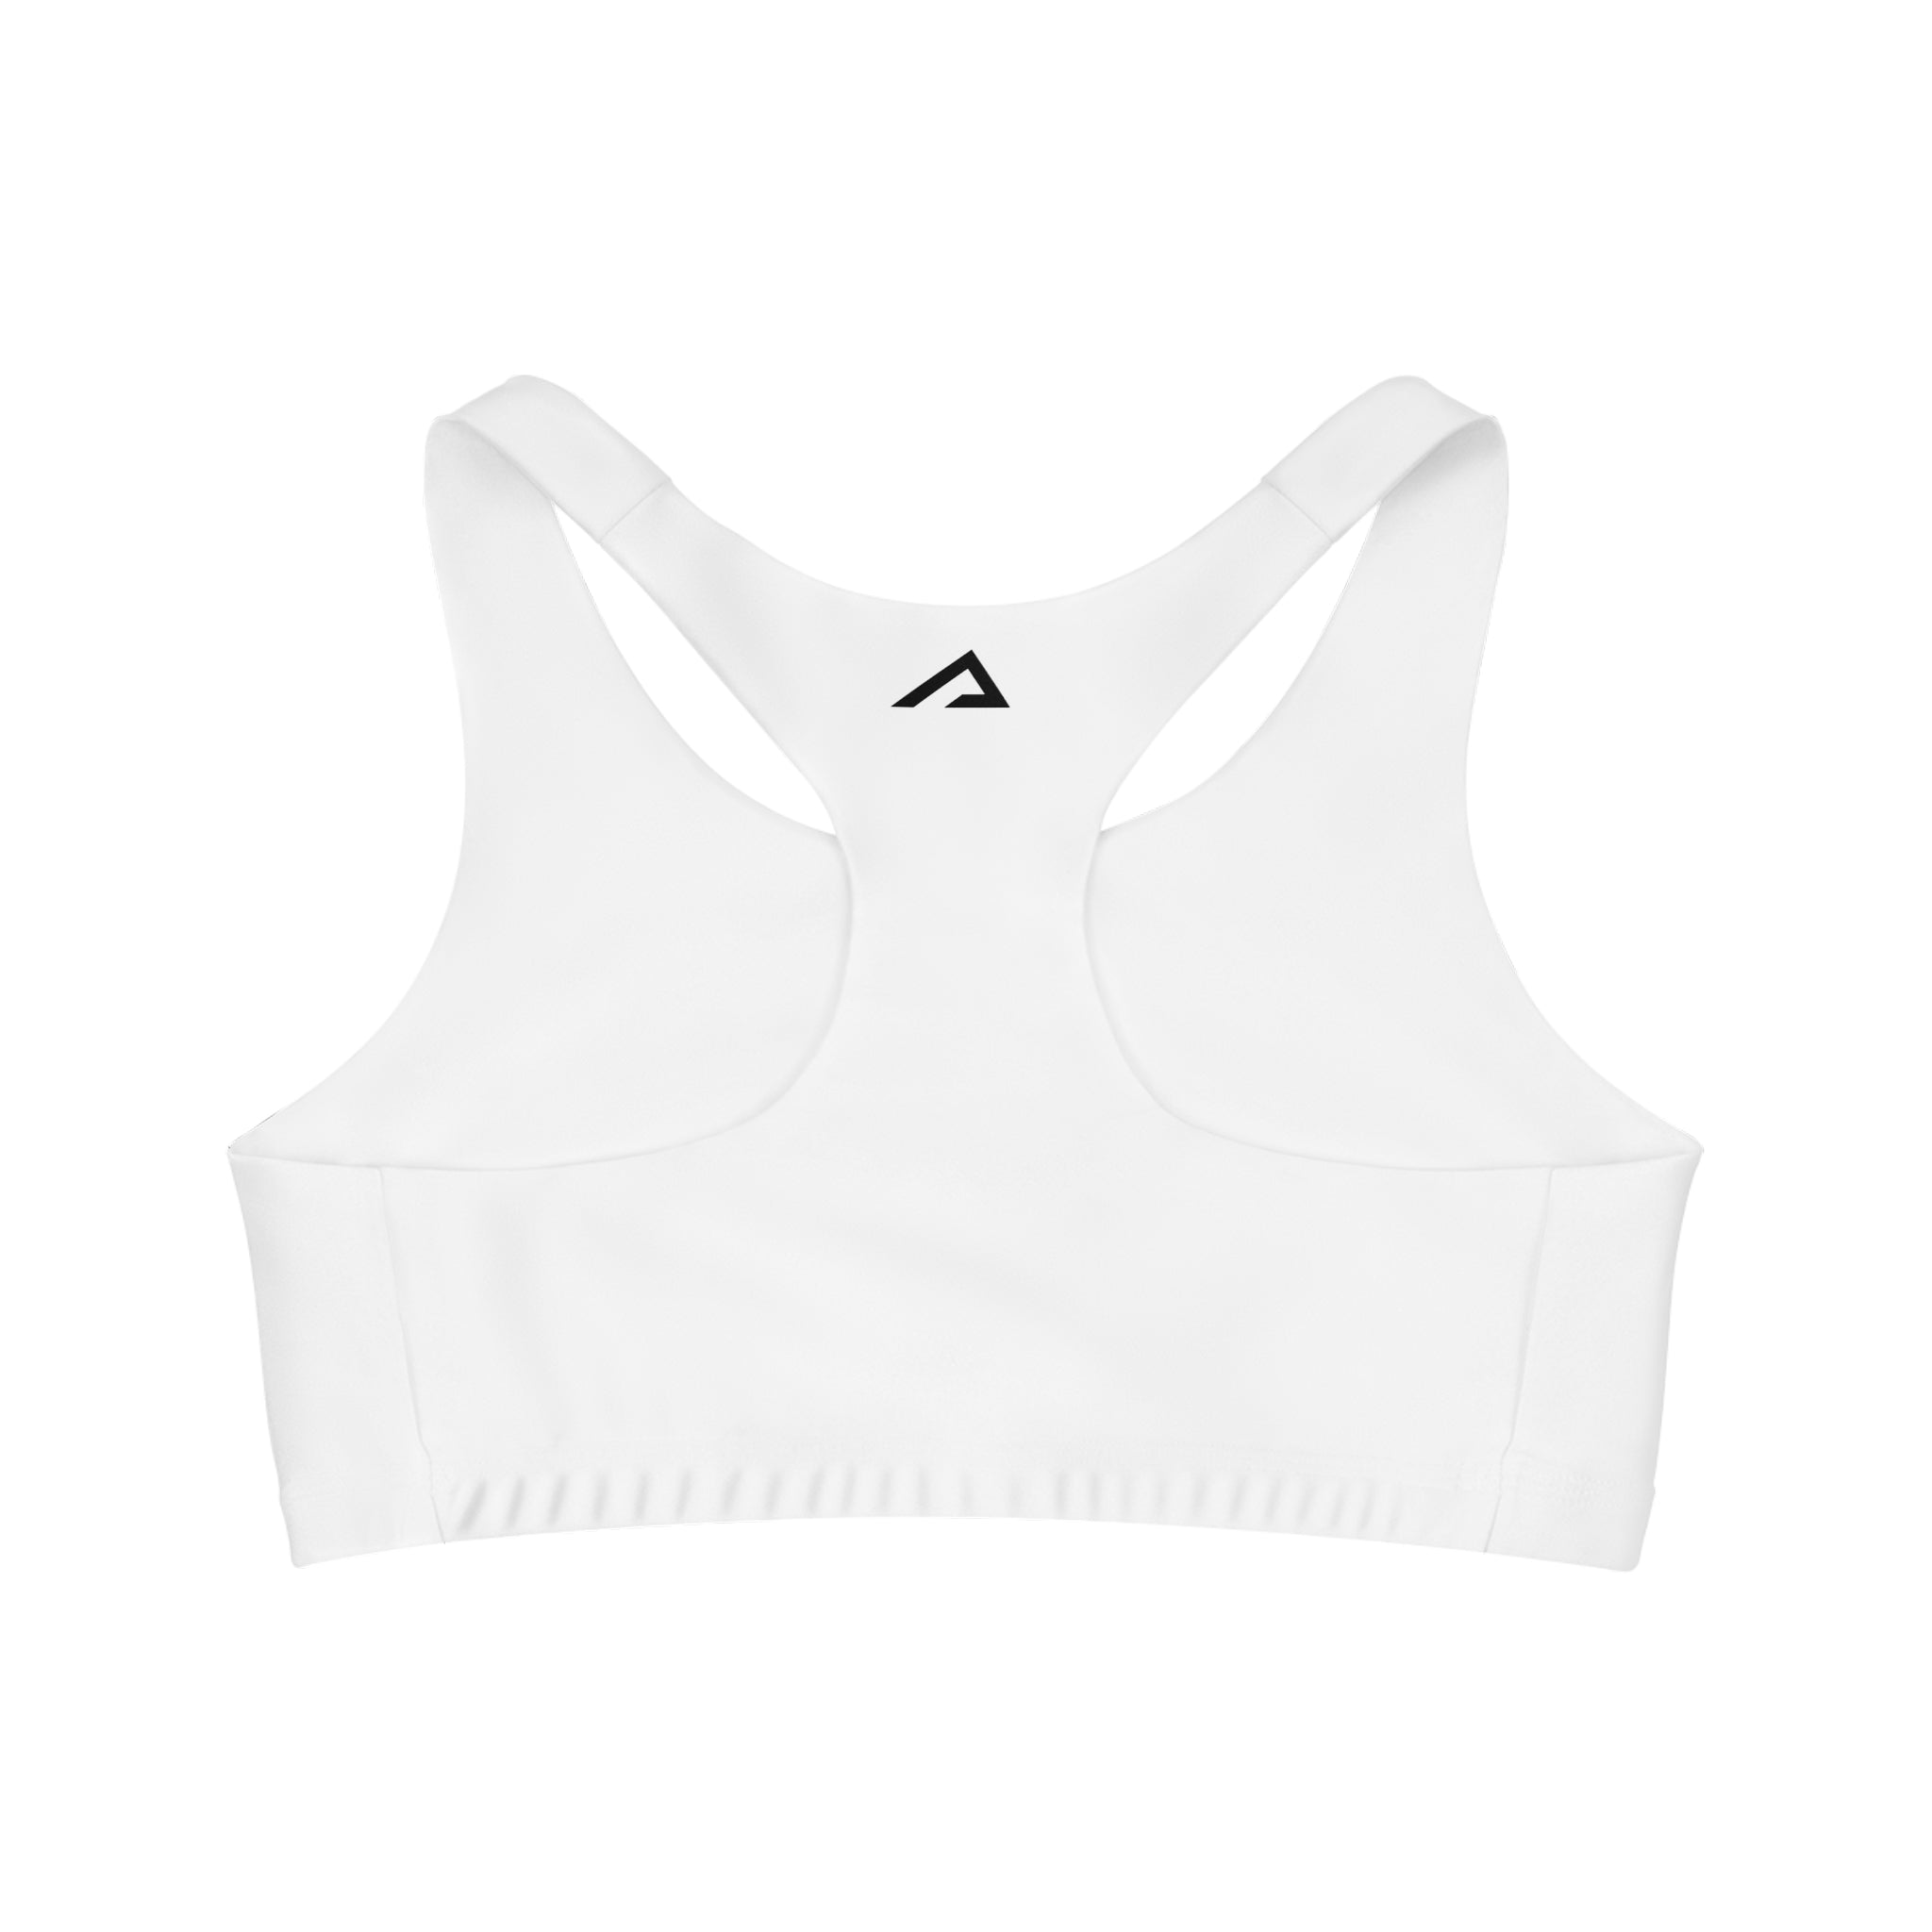 a women's sports bra top in white